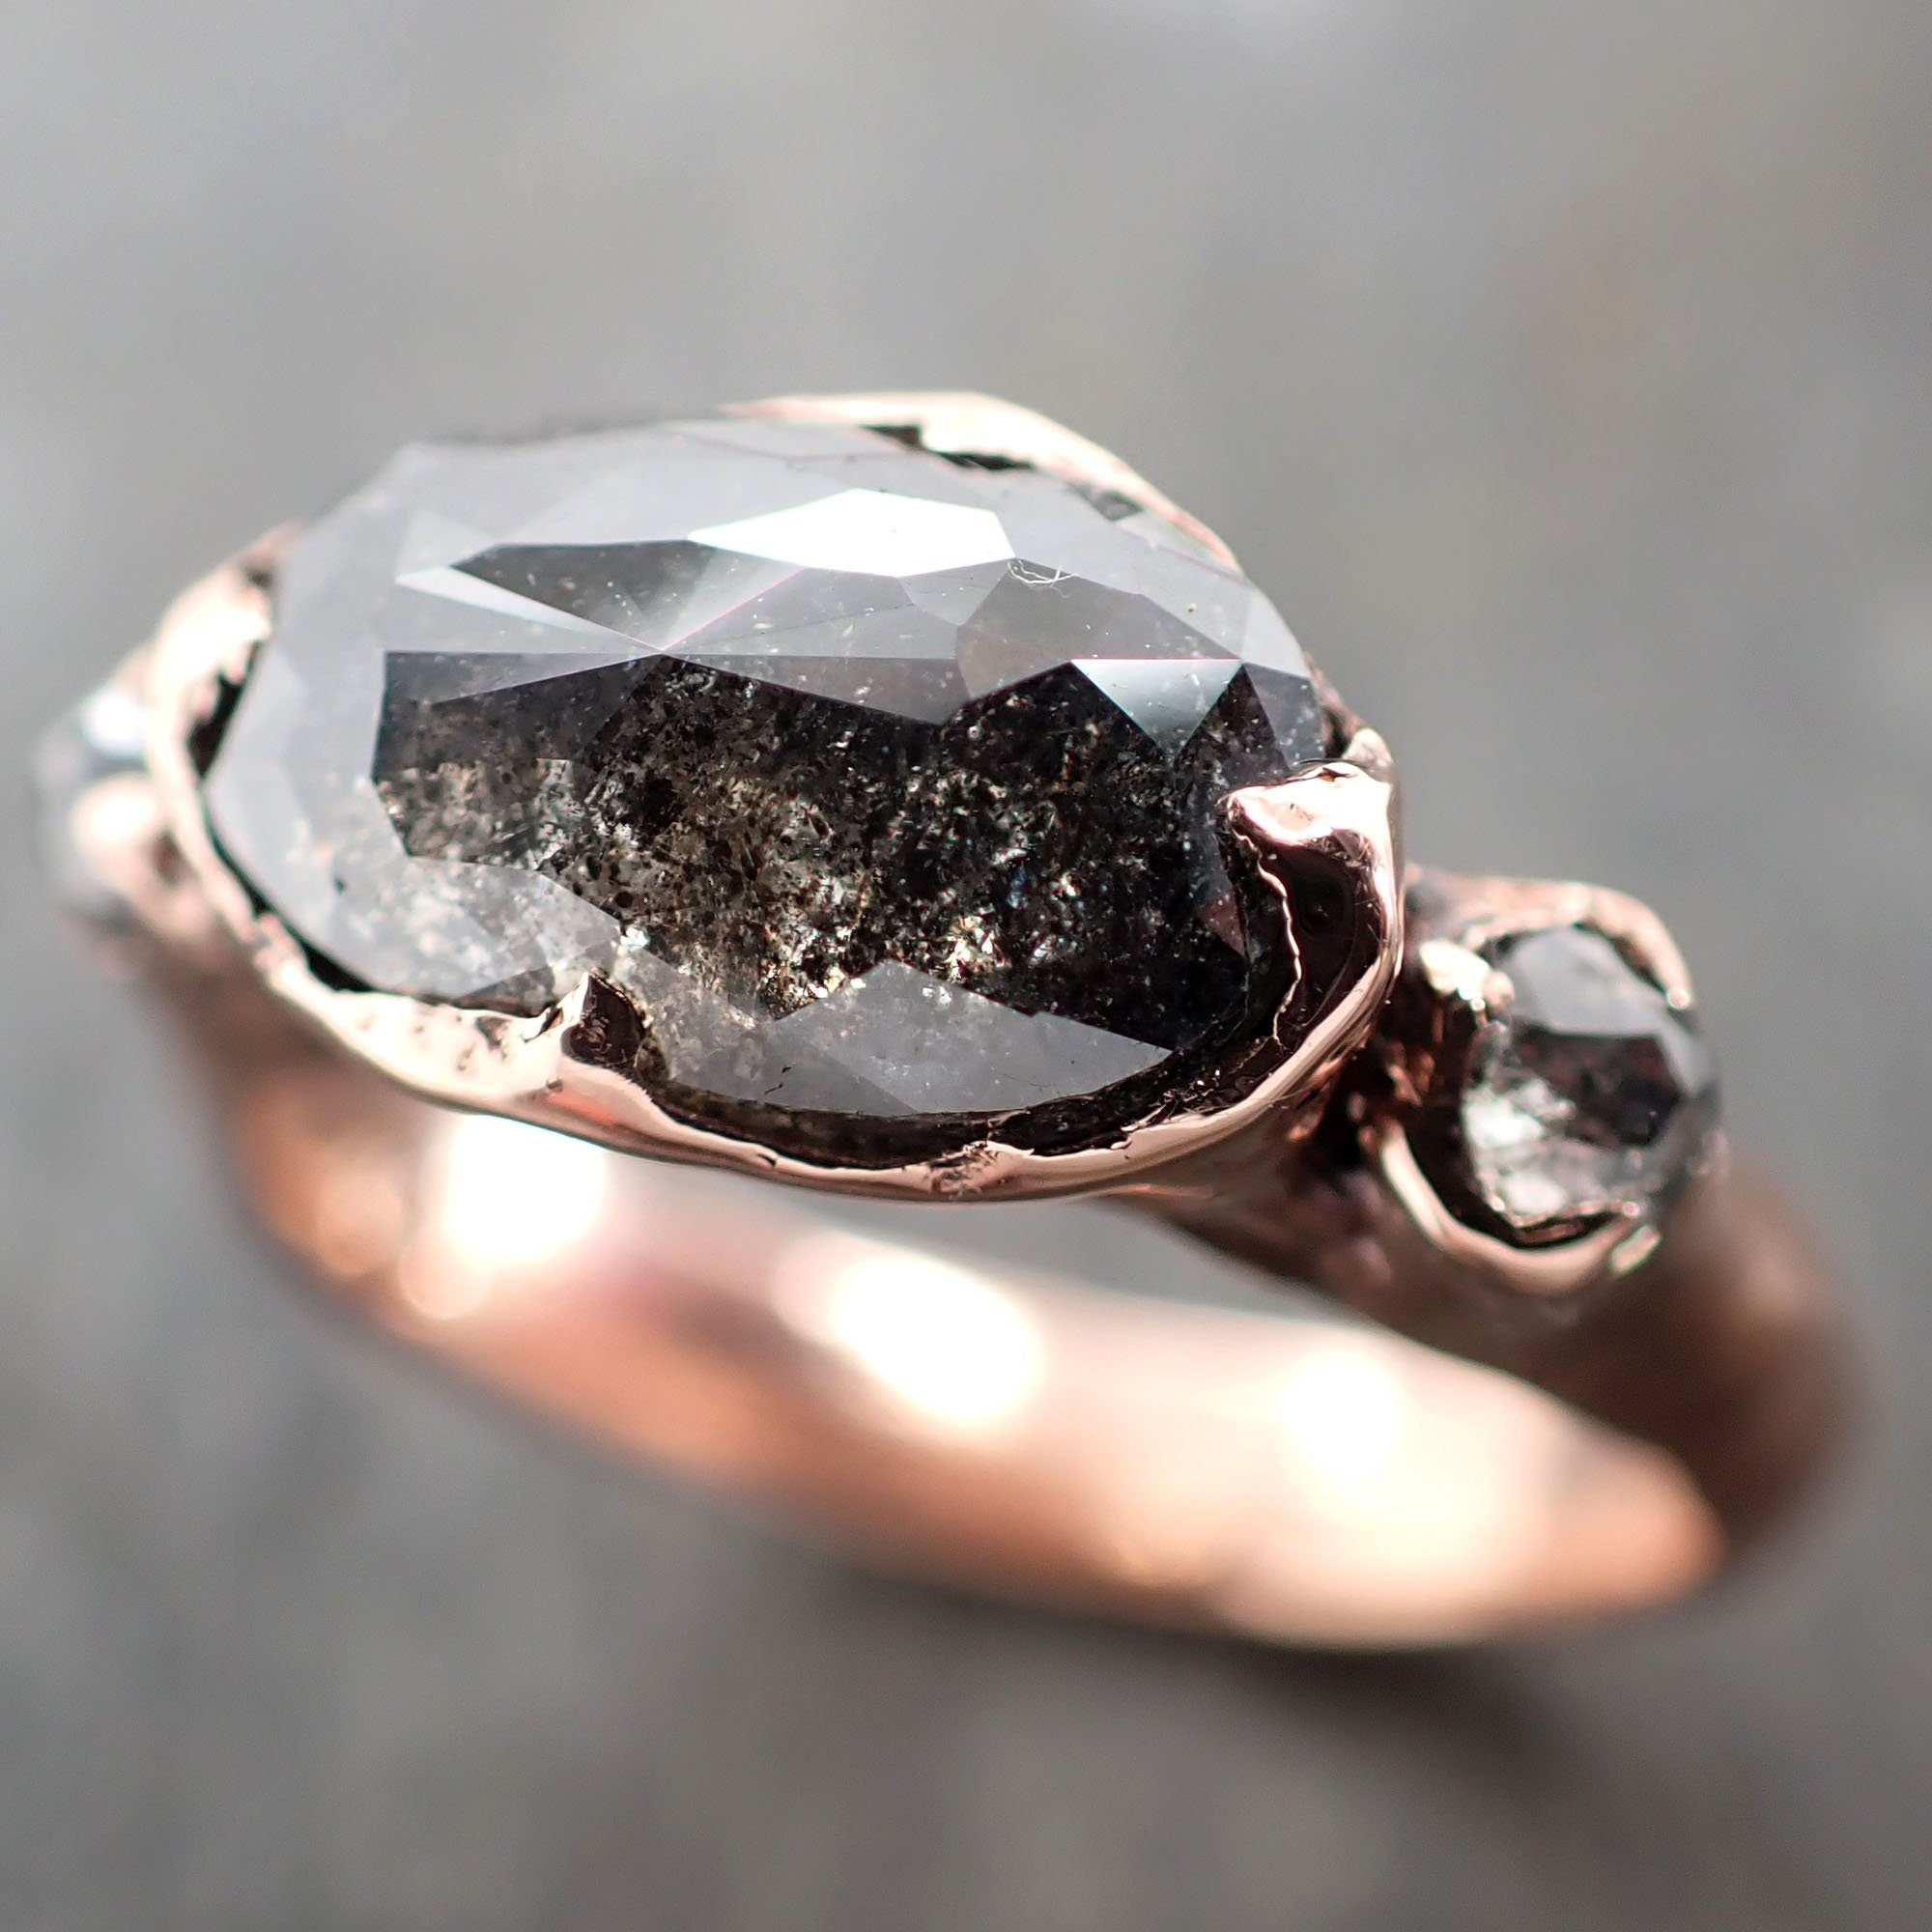 Fancy cut white Diamond Engagement 14k Rose Gold Multi stone Wedding Ring byAngeline 2975